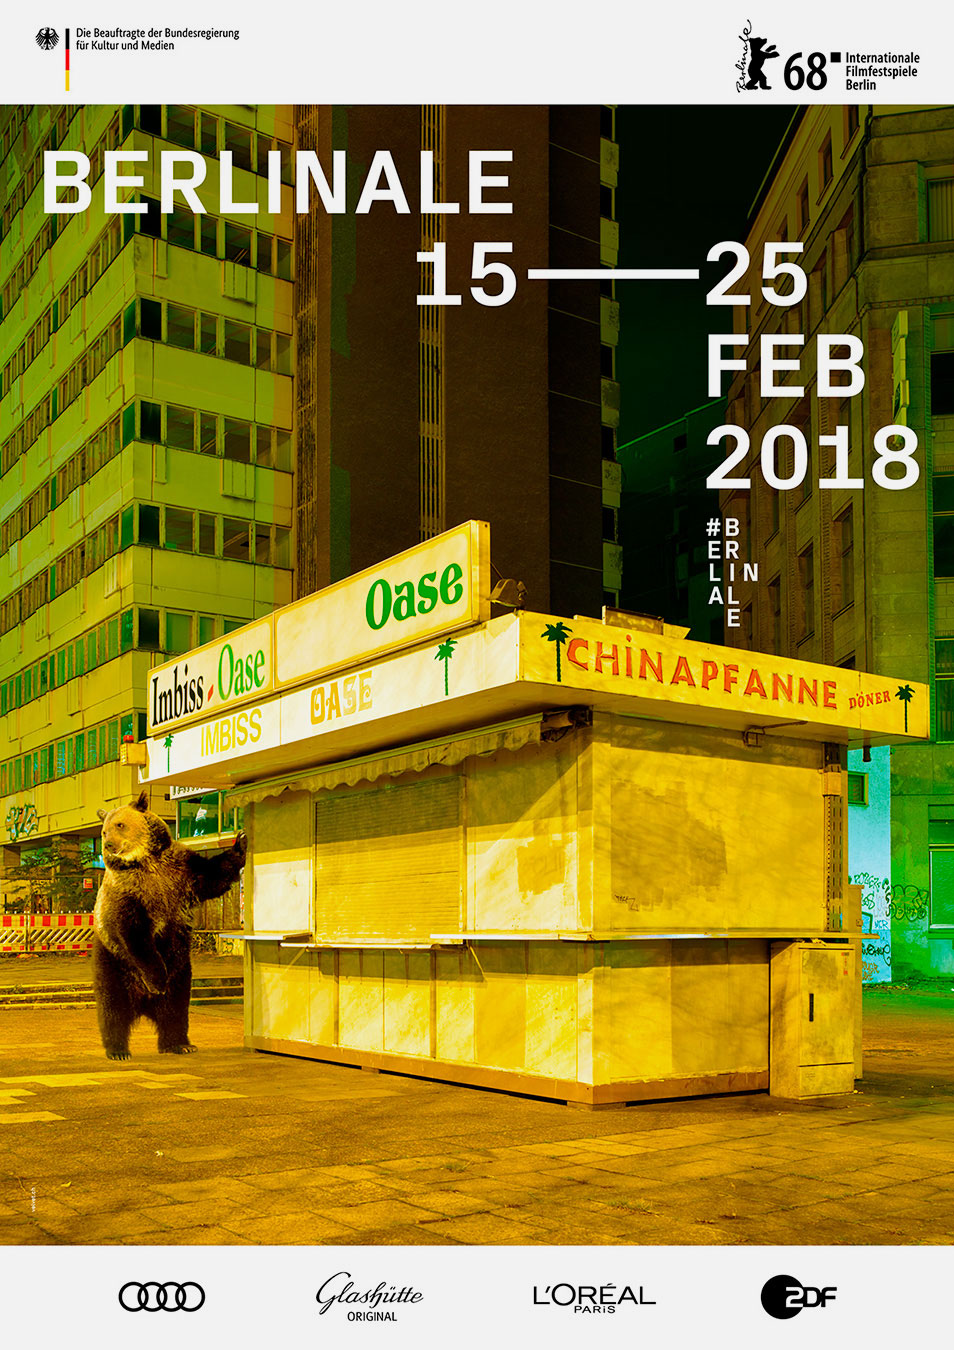 Berlinale Plakat 2018 Keyvisual Design